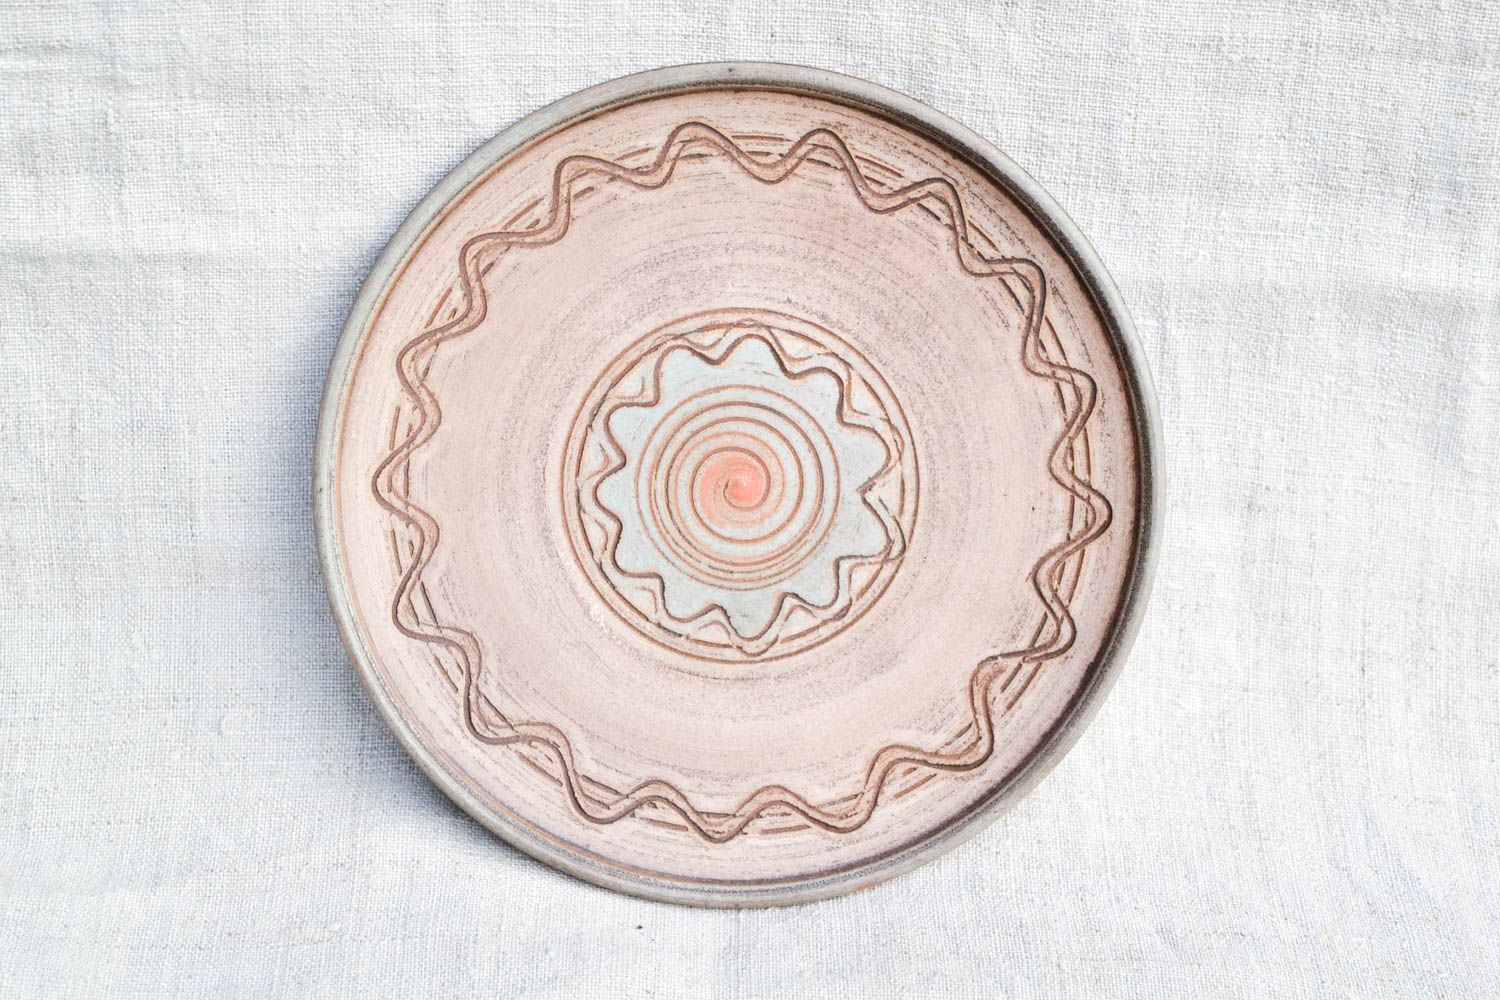 Handmade ceramic plate ceramic dish kitchen plates souvenir ideas kitchen decor photo 3